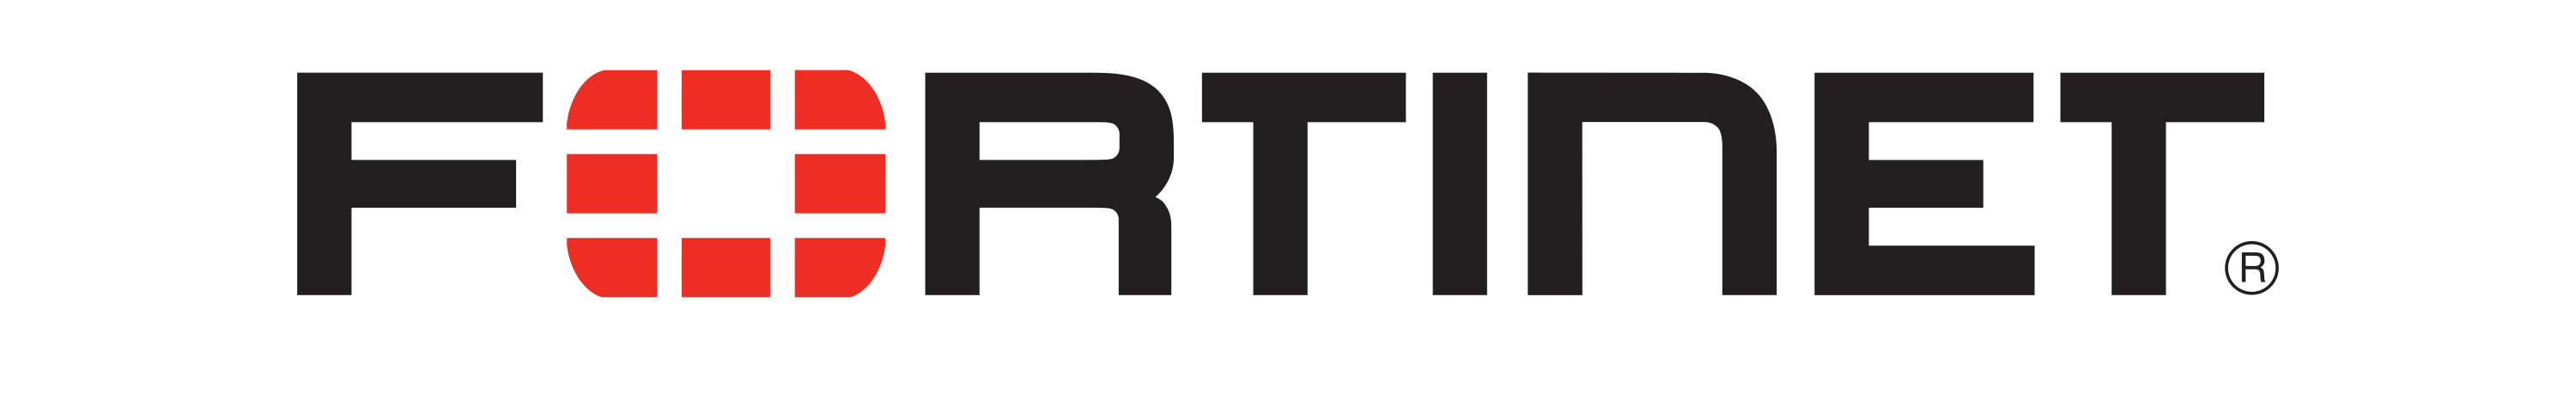 Fortinet-Logo-wine